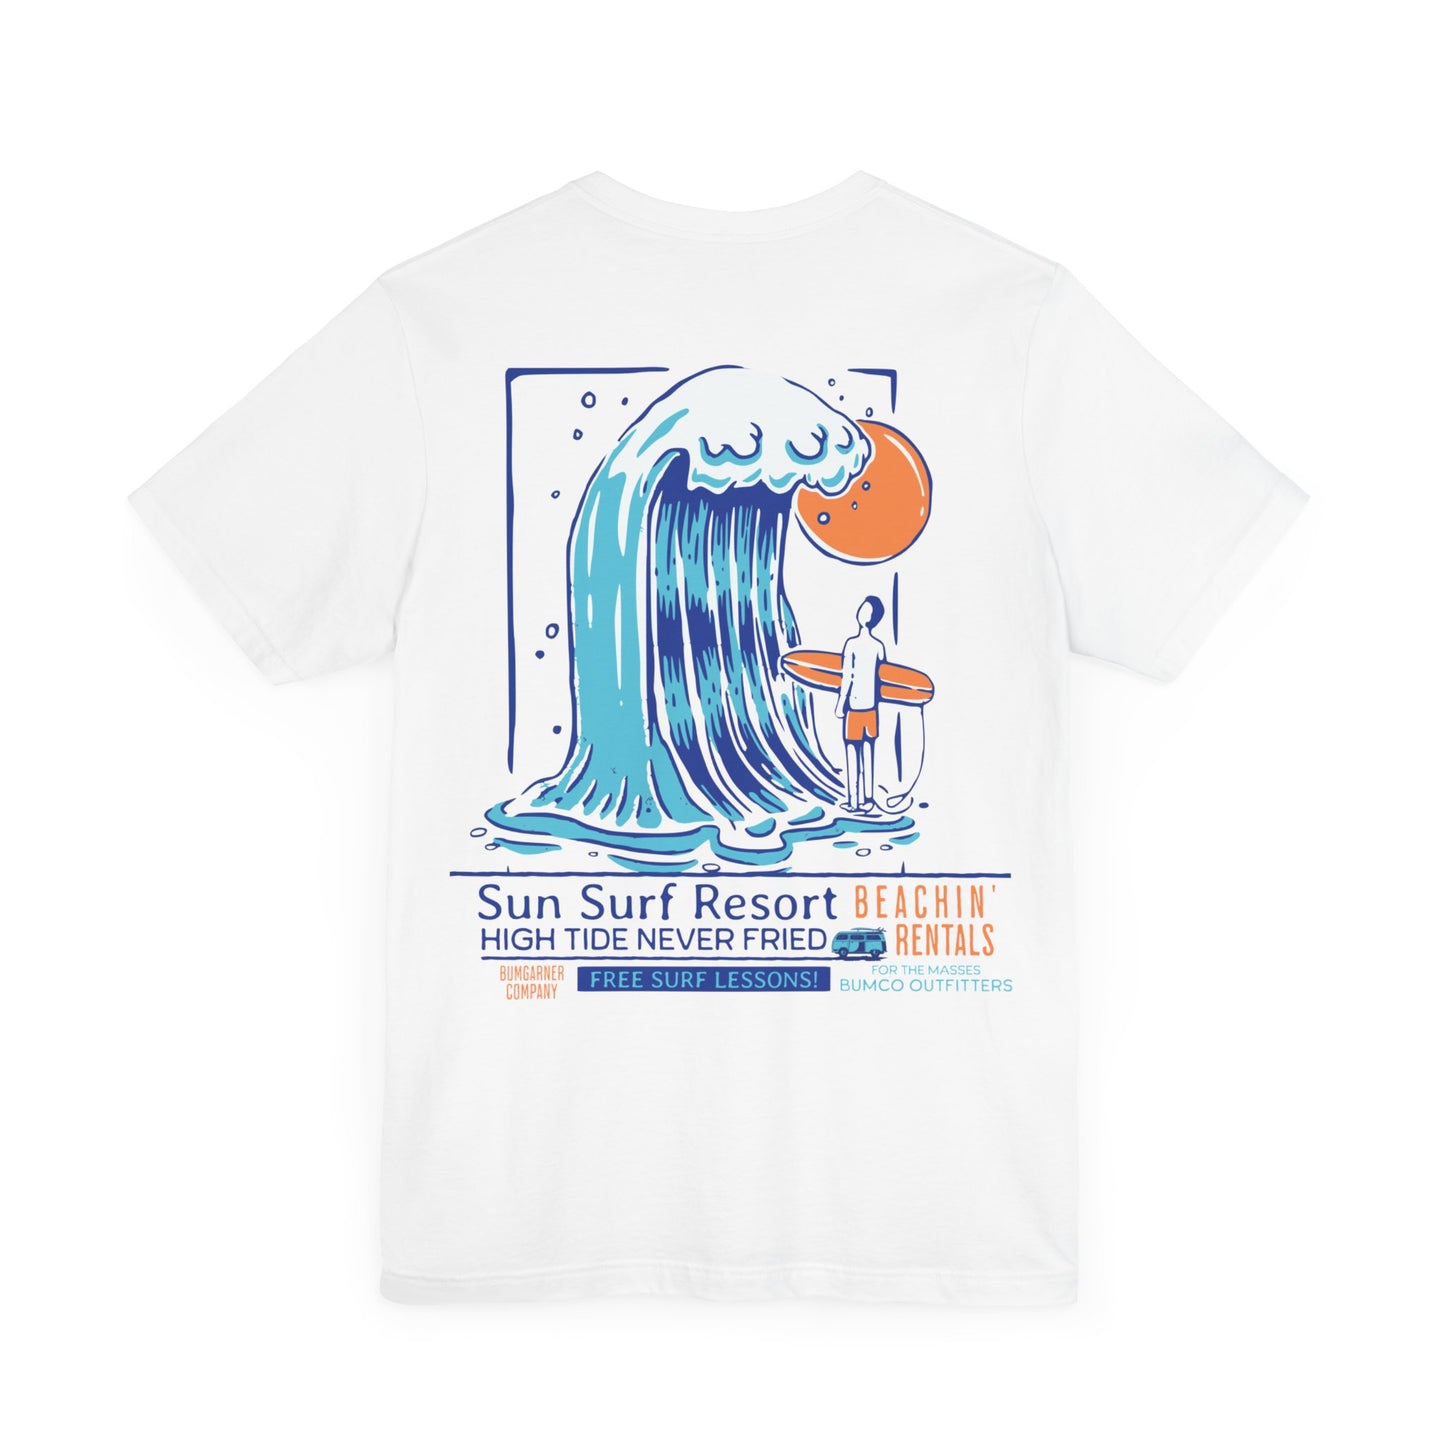 Surf Resort - T-Shirt